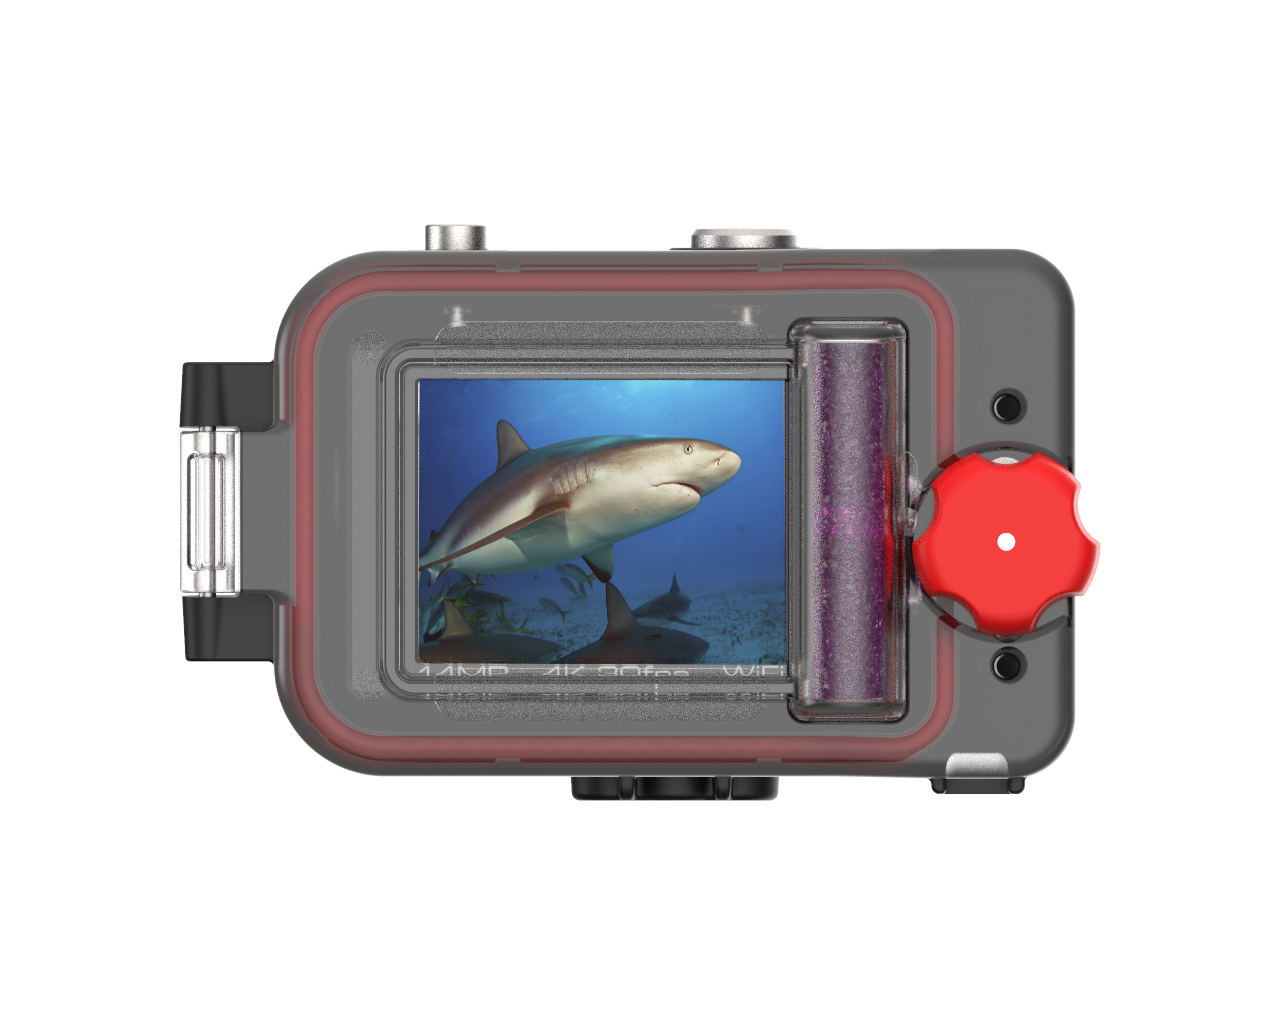 SeaLife ReefMaster RM-4K Underwater Picture/Video Camera